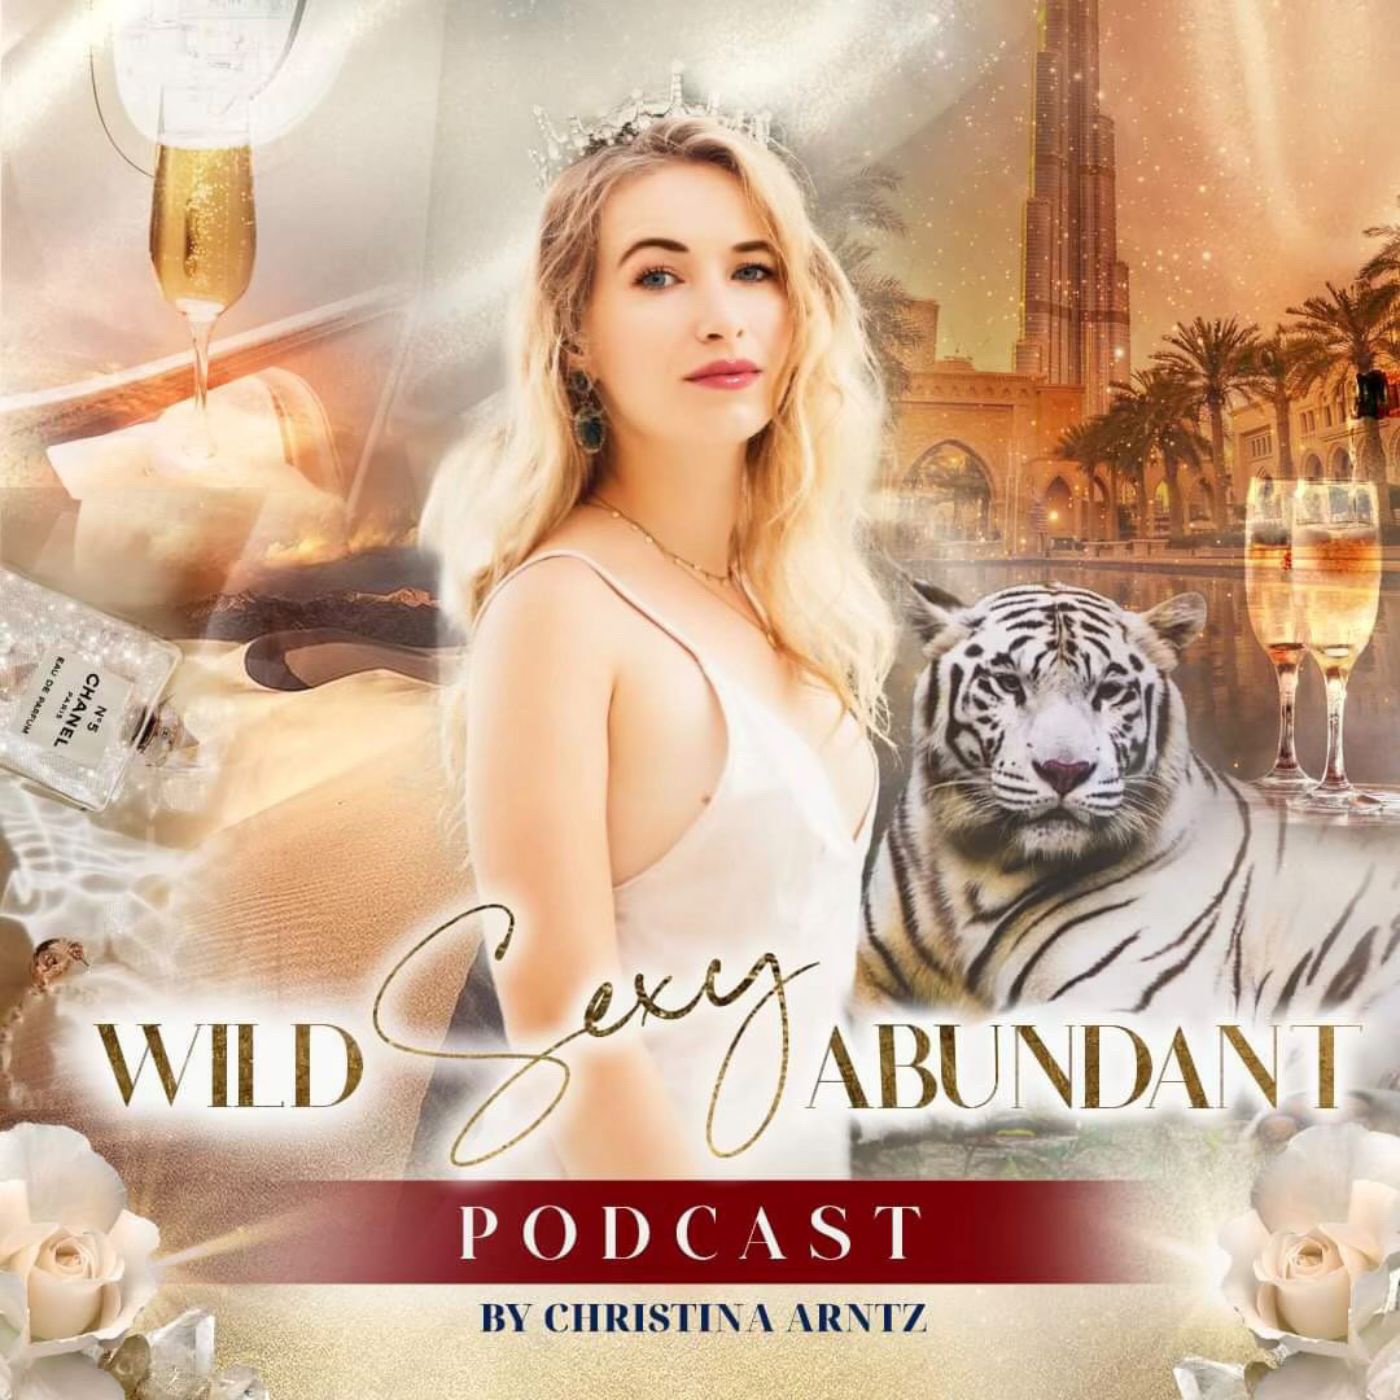 The Wild Sexy Abundant Podcast